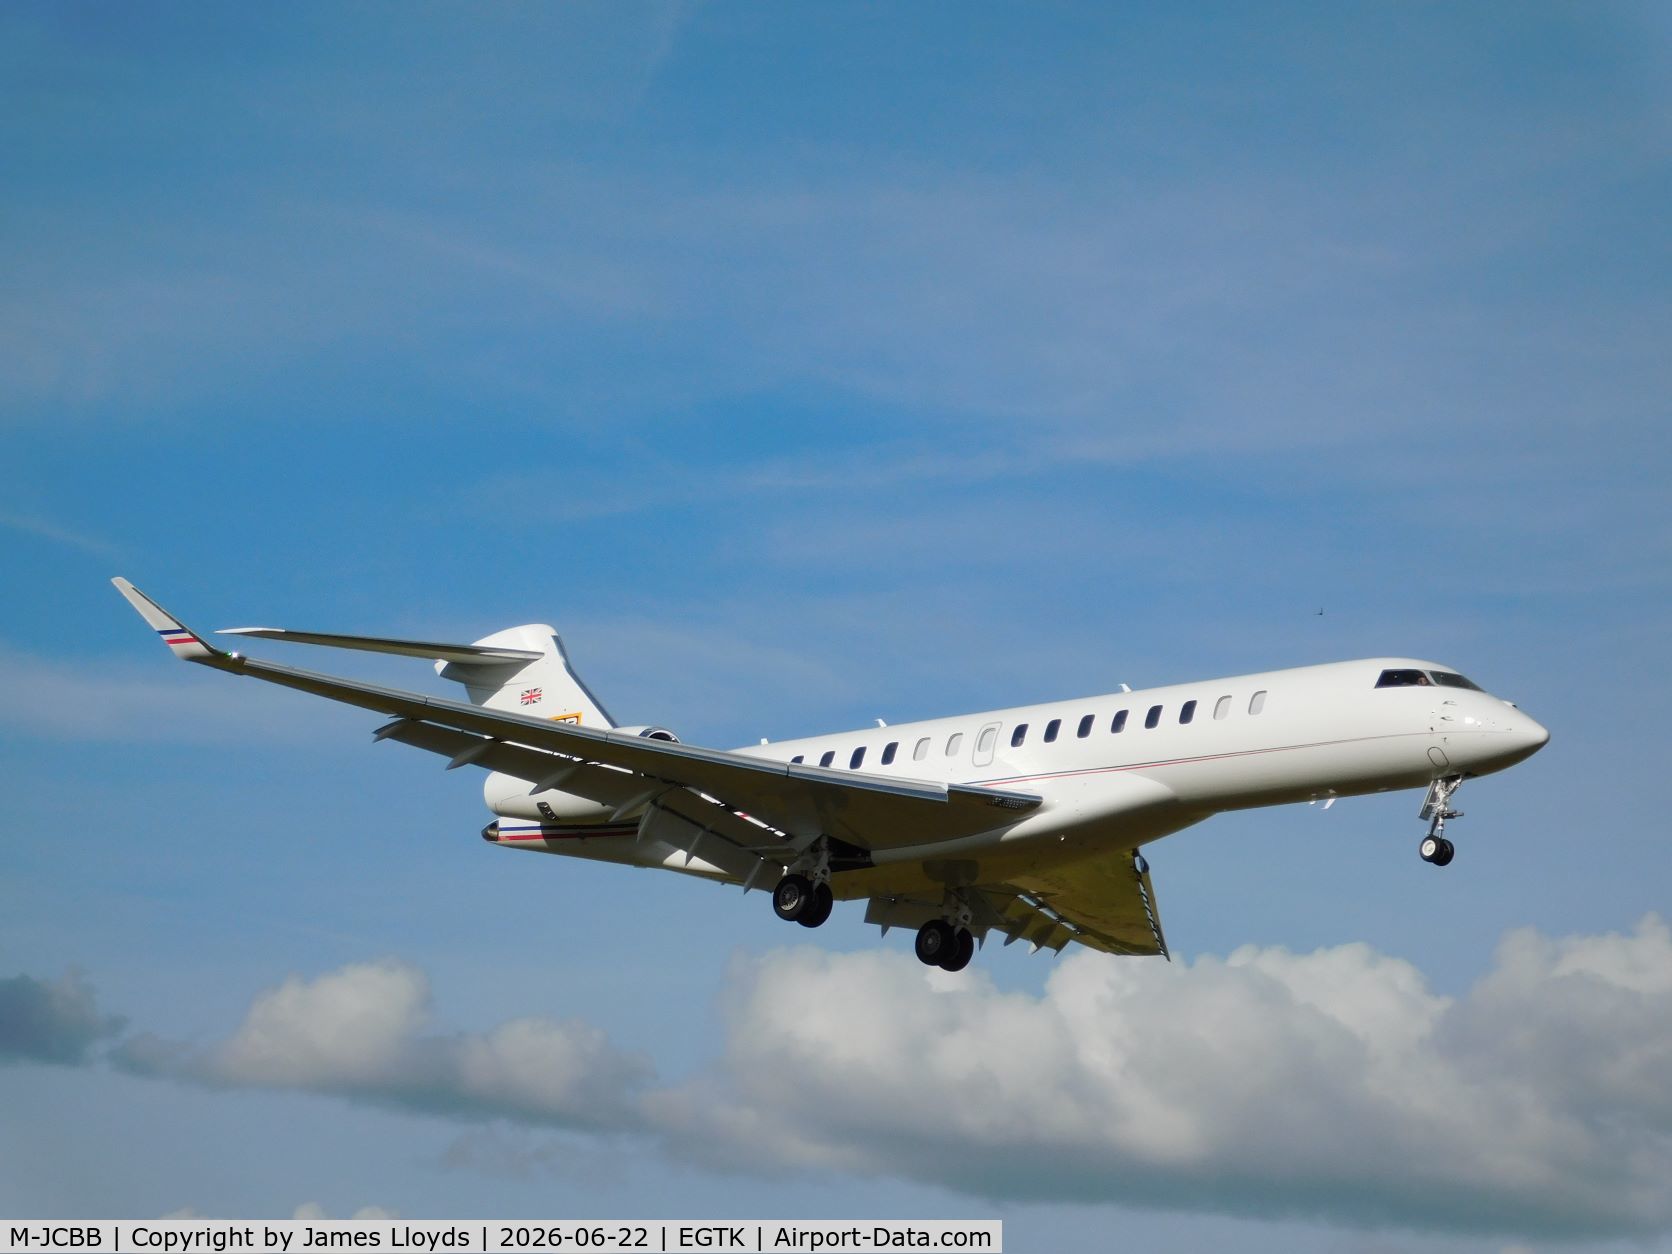 M-JCBB, 2022 Bombardier Global Express 7500 C/N 6049, At Oxford Airport.